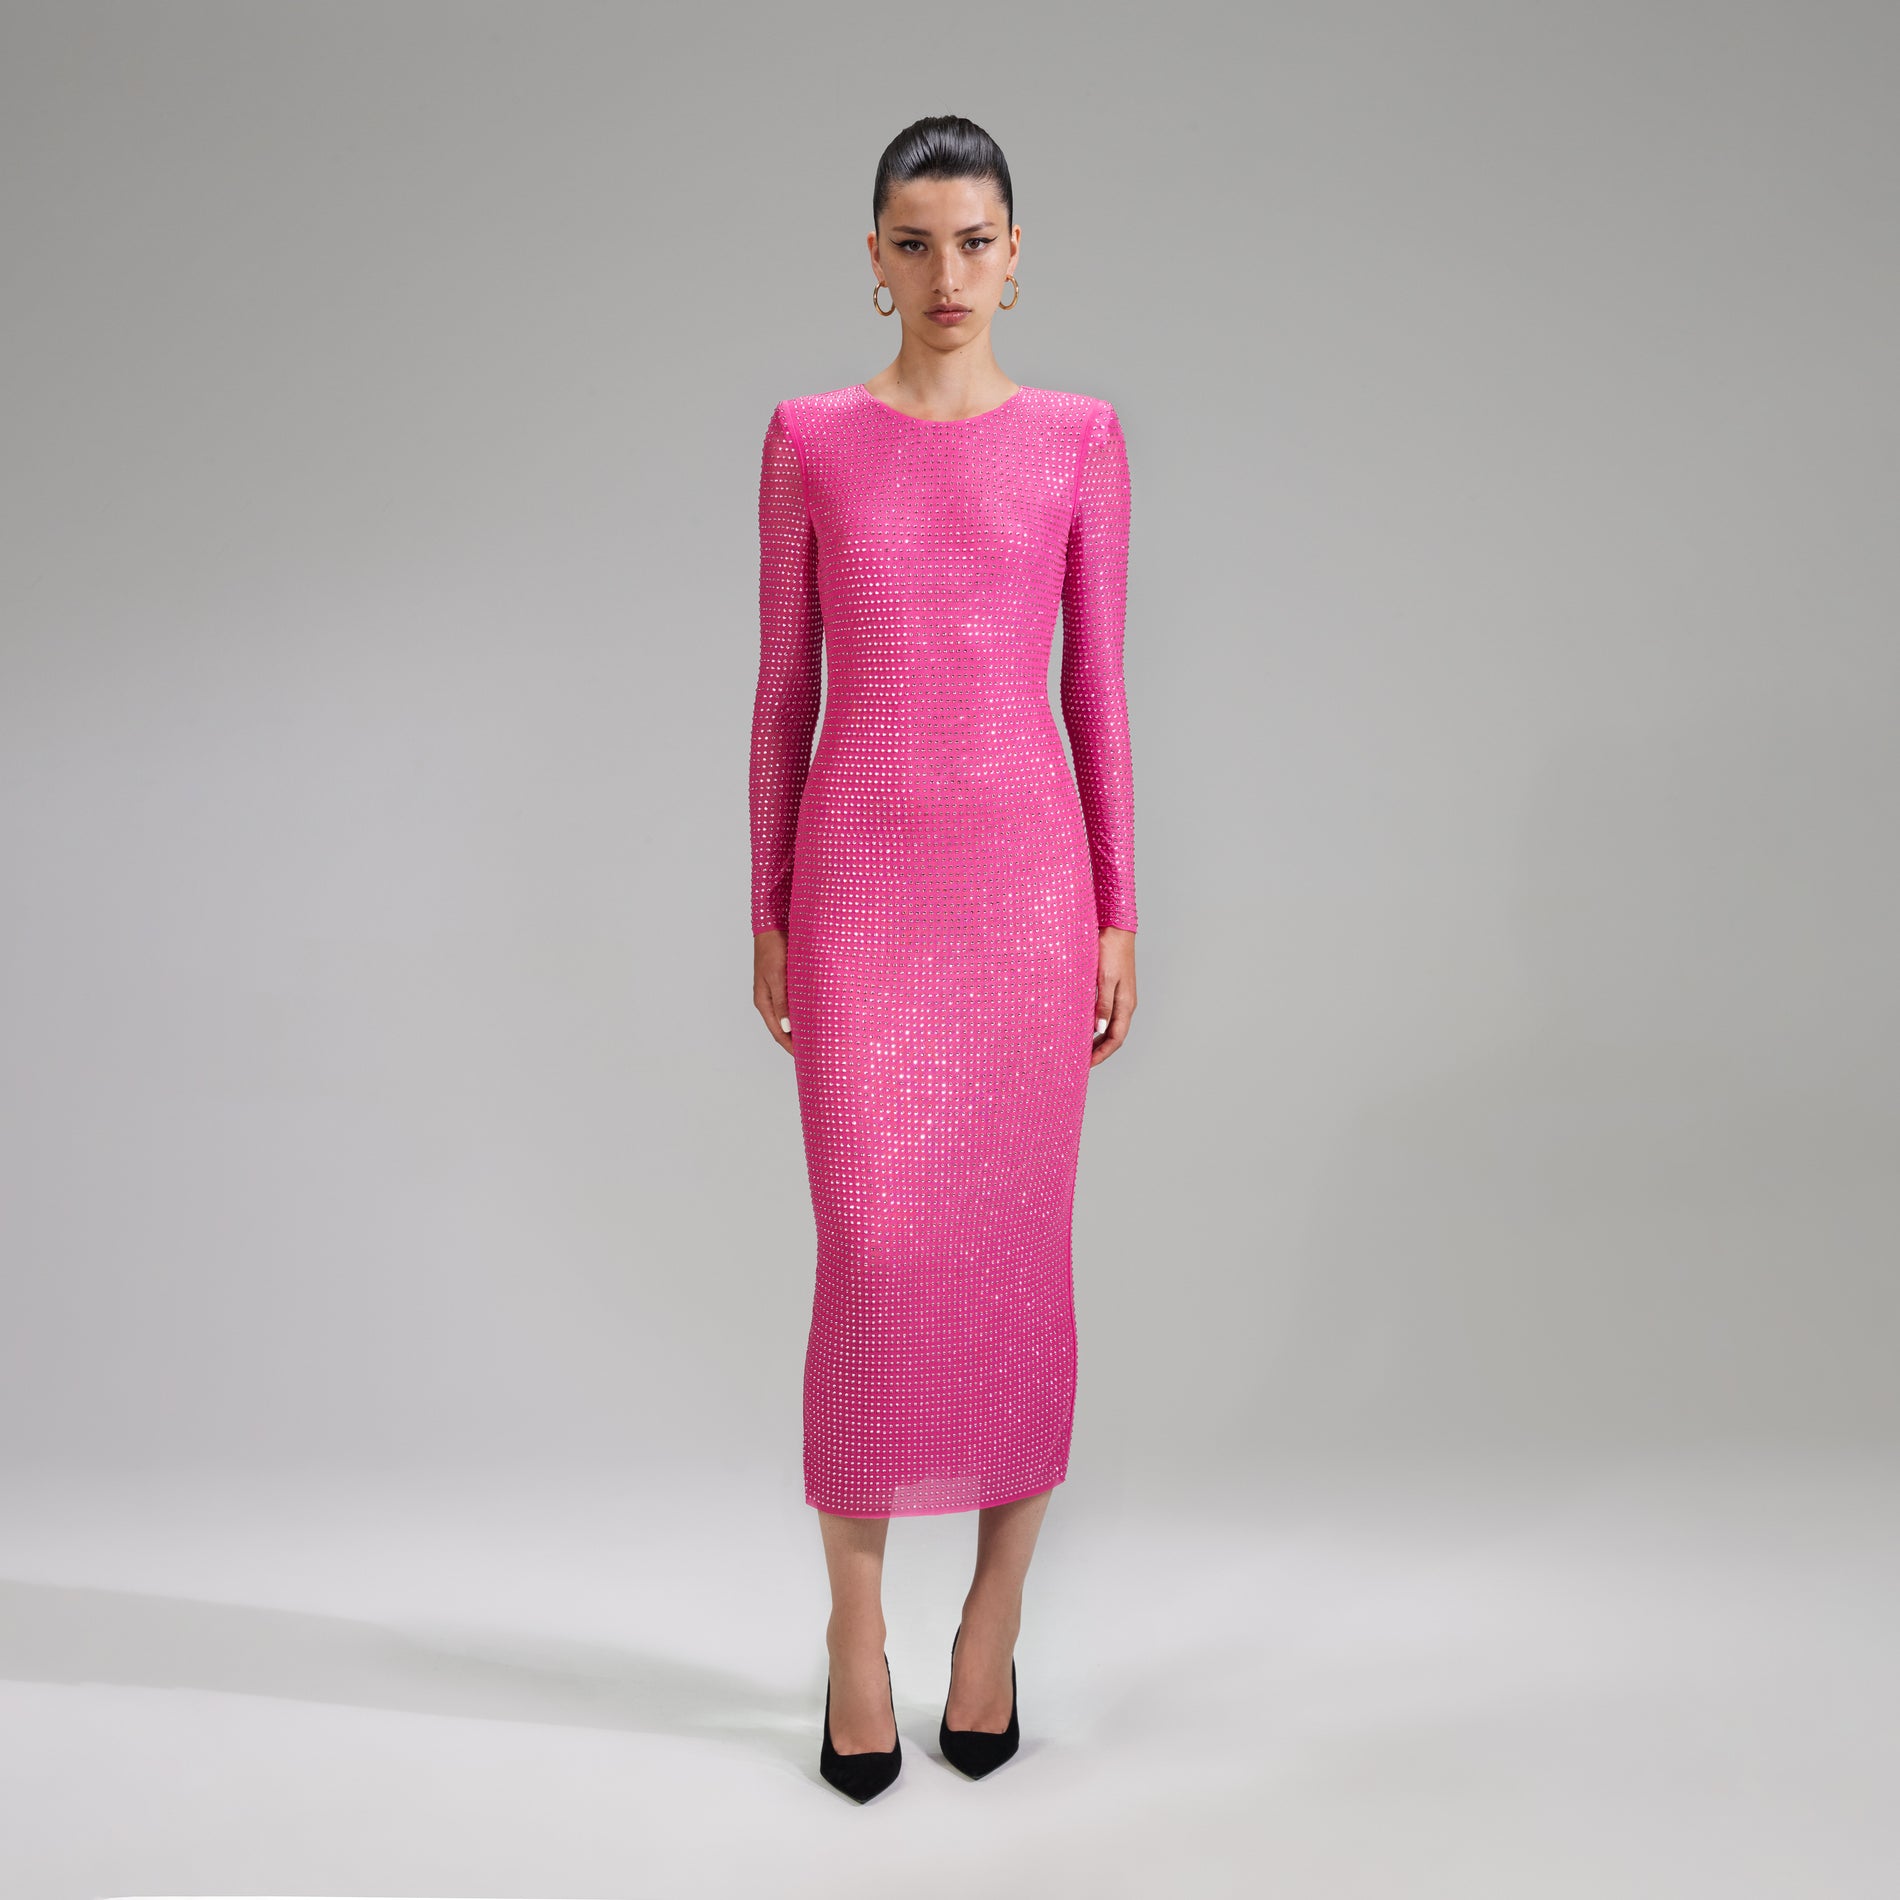 A woman wearing the Pink Rhinestone Mesh Midi Dress